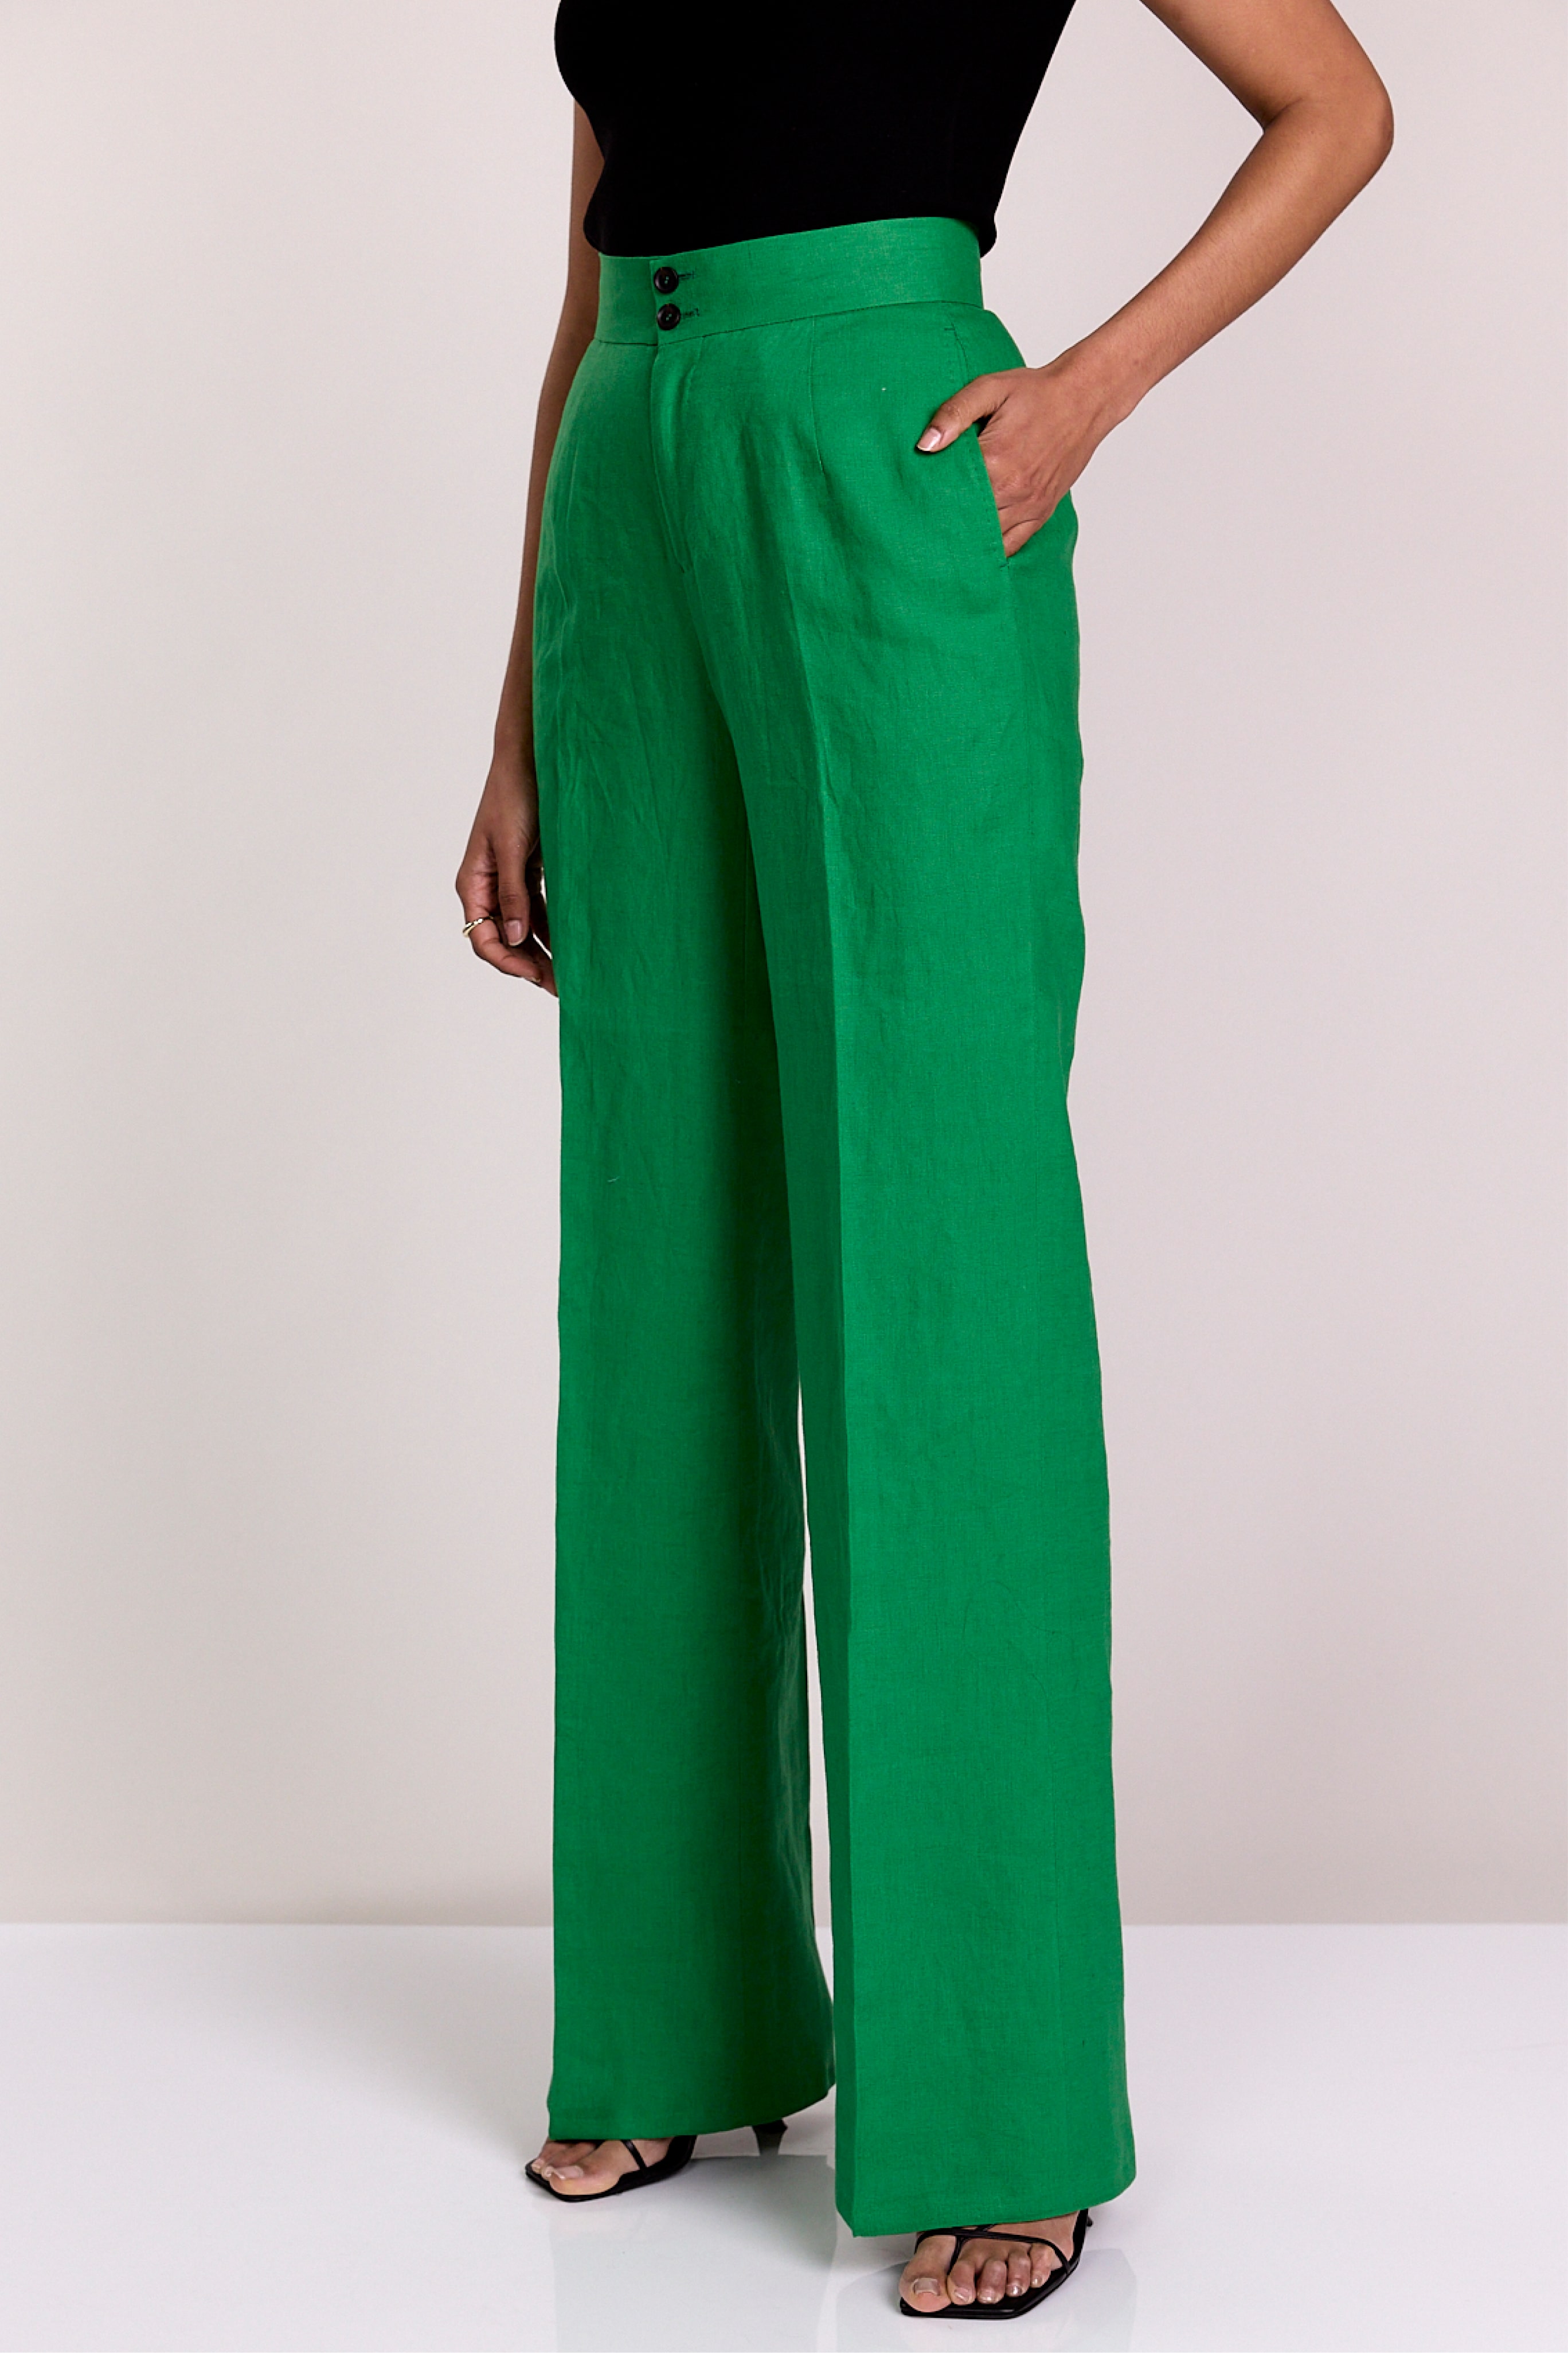 5 Best Ways To Wear Green Formal Shirt Combination Pants | by daisyfashion  | Medium